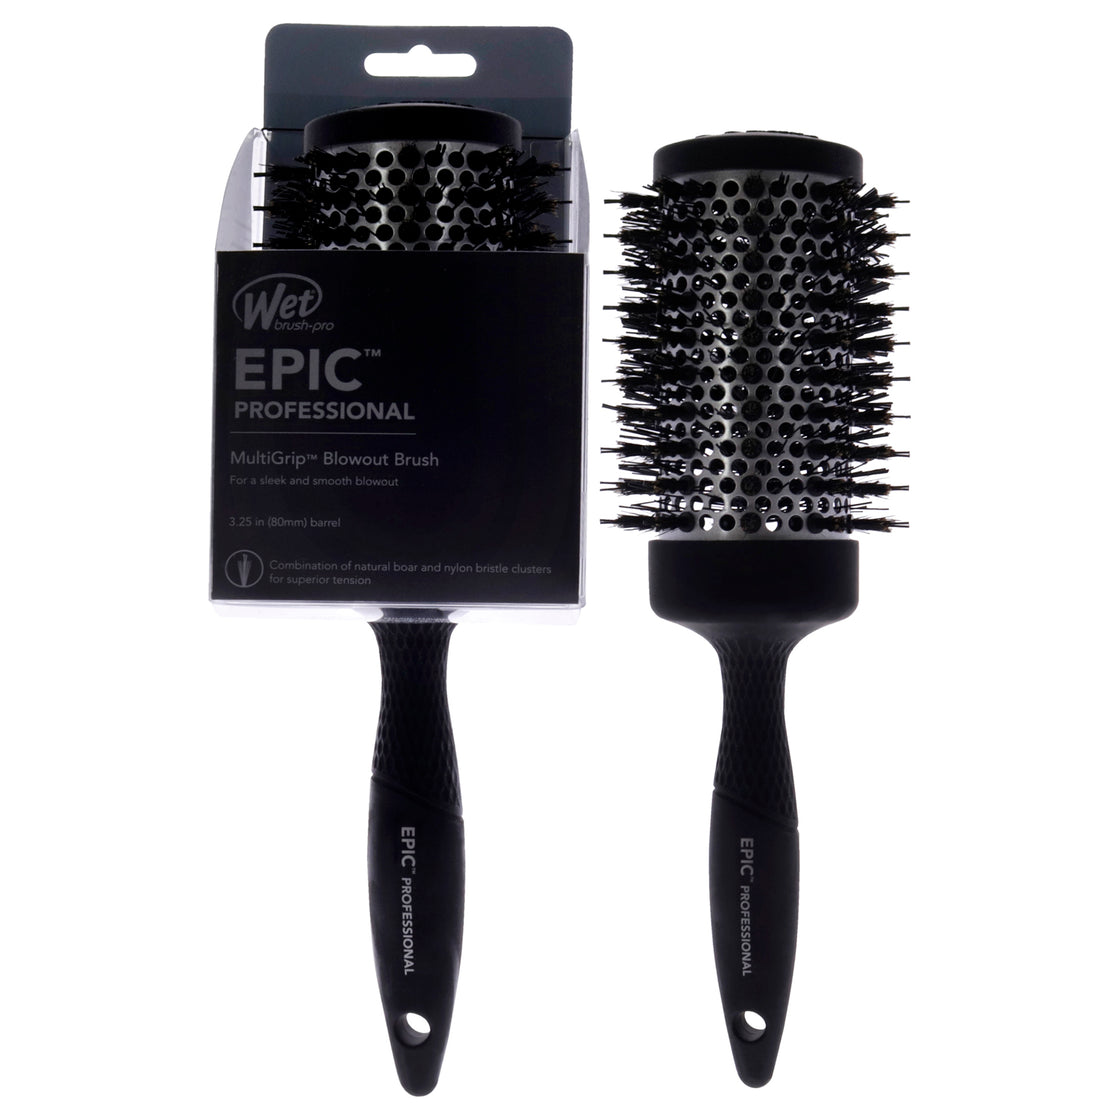 Epic Pro MultiGrip Blowout Brush - Large by Wet Brush for Unisex - 3.5 Inch Hair Brush